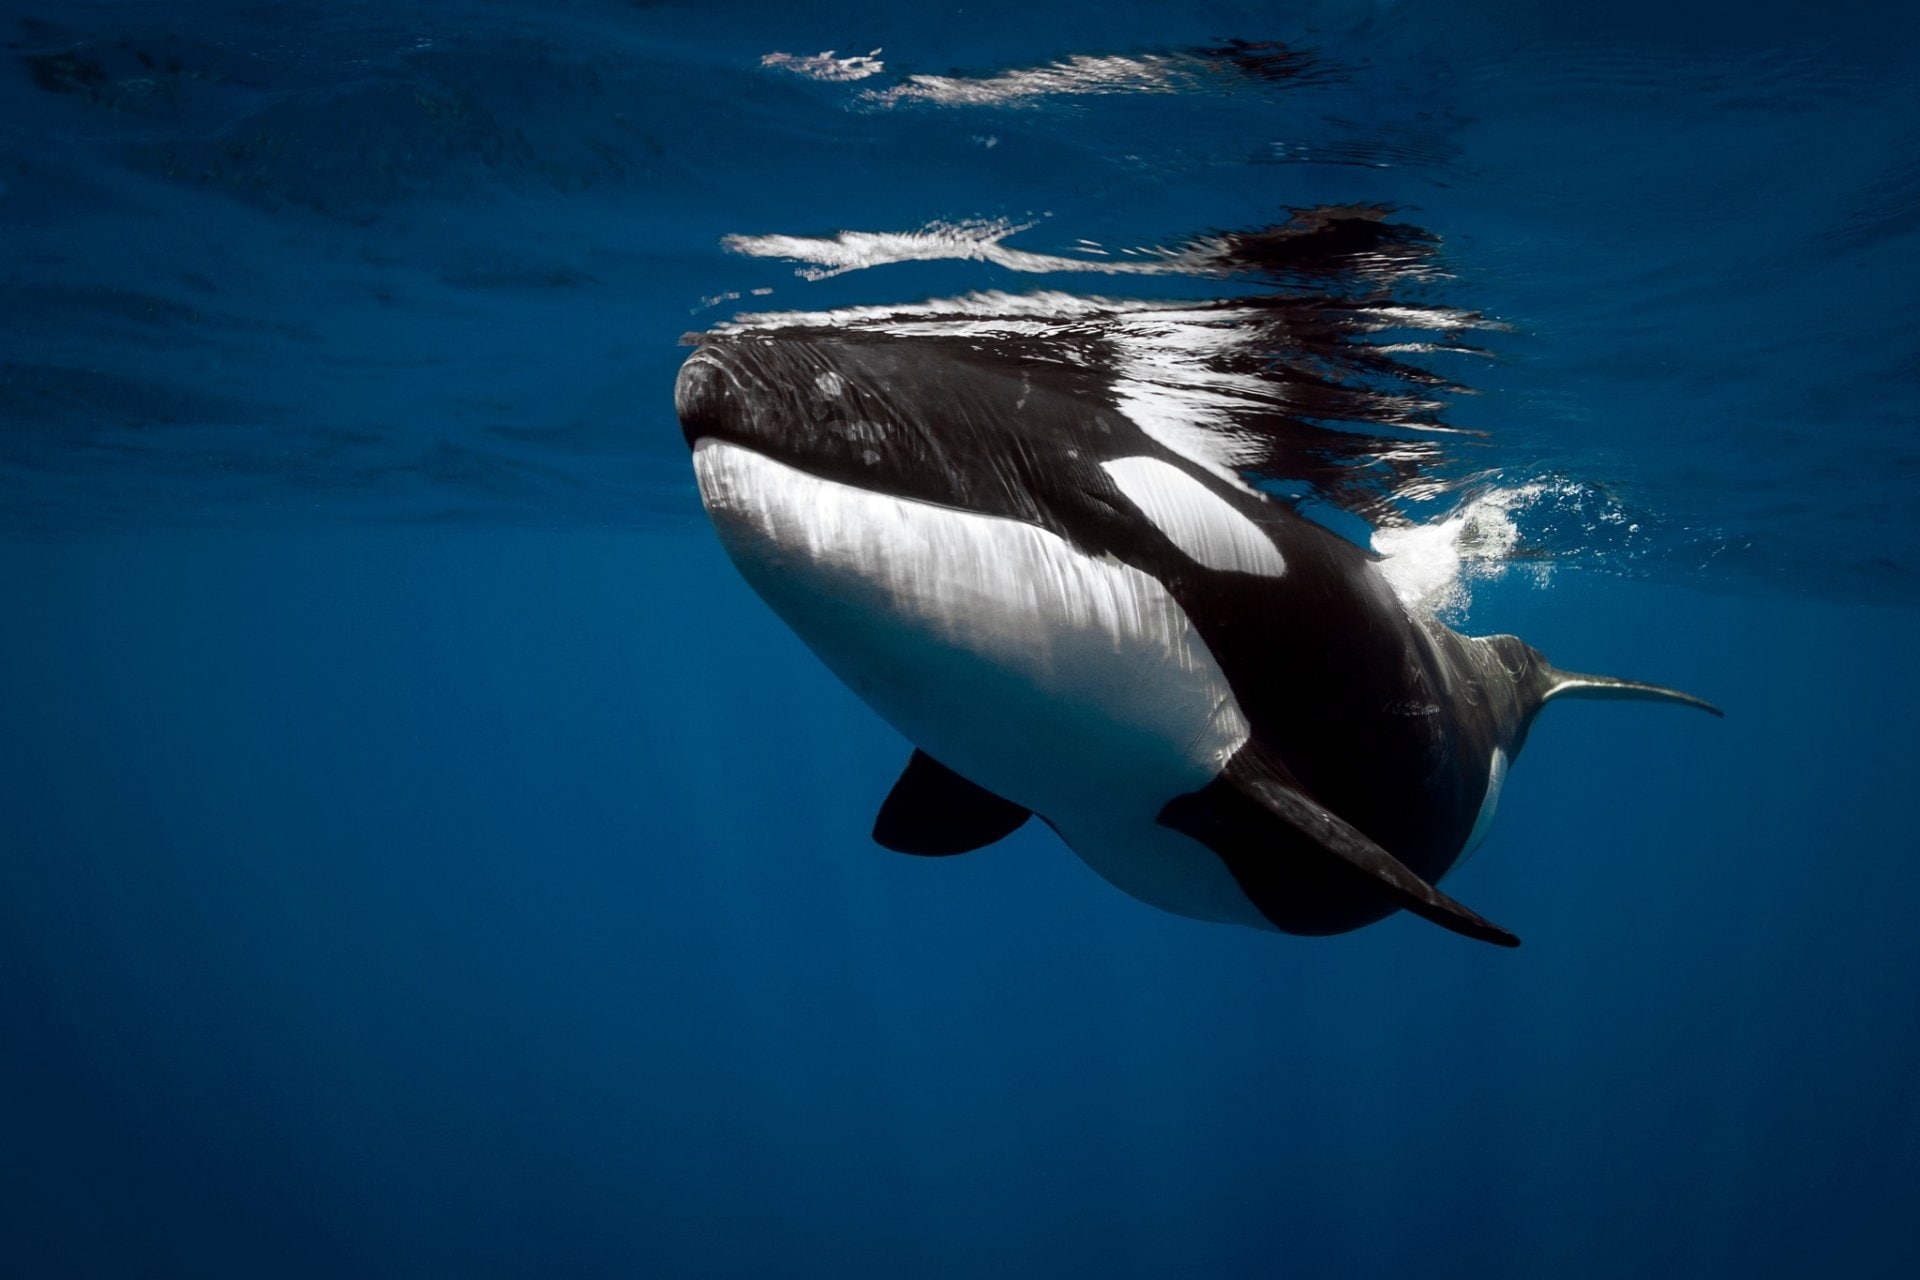 Animal, Orca, Sea Life, Underwater, animals in the wild, animal wildlife